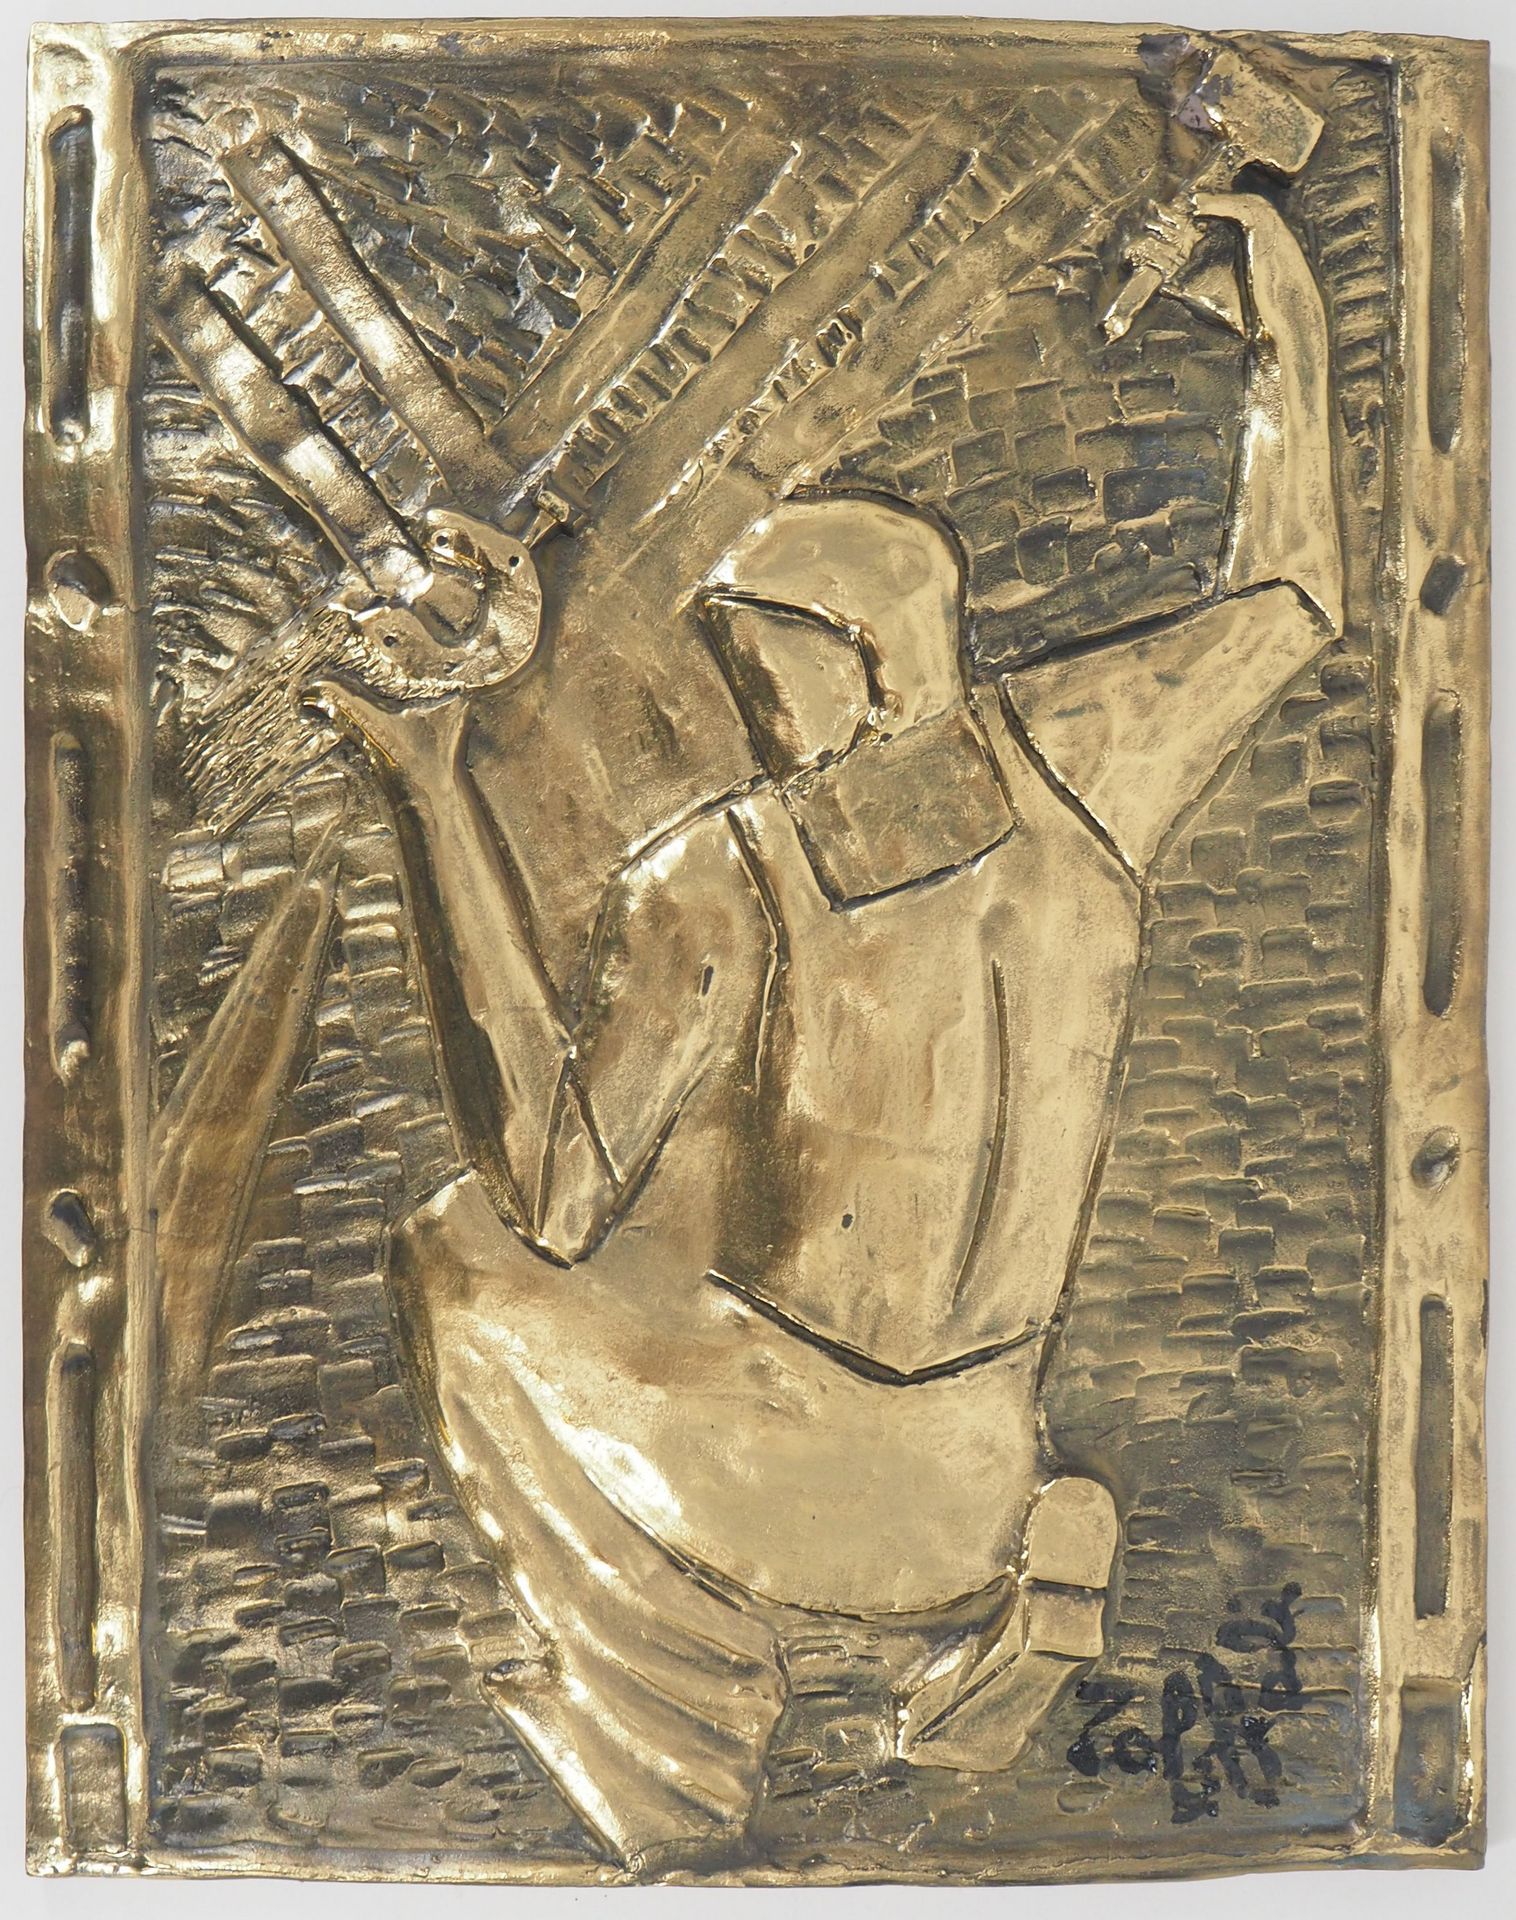 Louis TOFFOLI Louis TOFFOLI

Le Maréchal Ferrant, 1986

Bas relief en bronze pat&hellip;